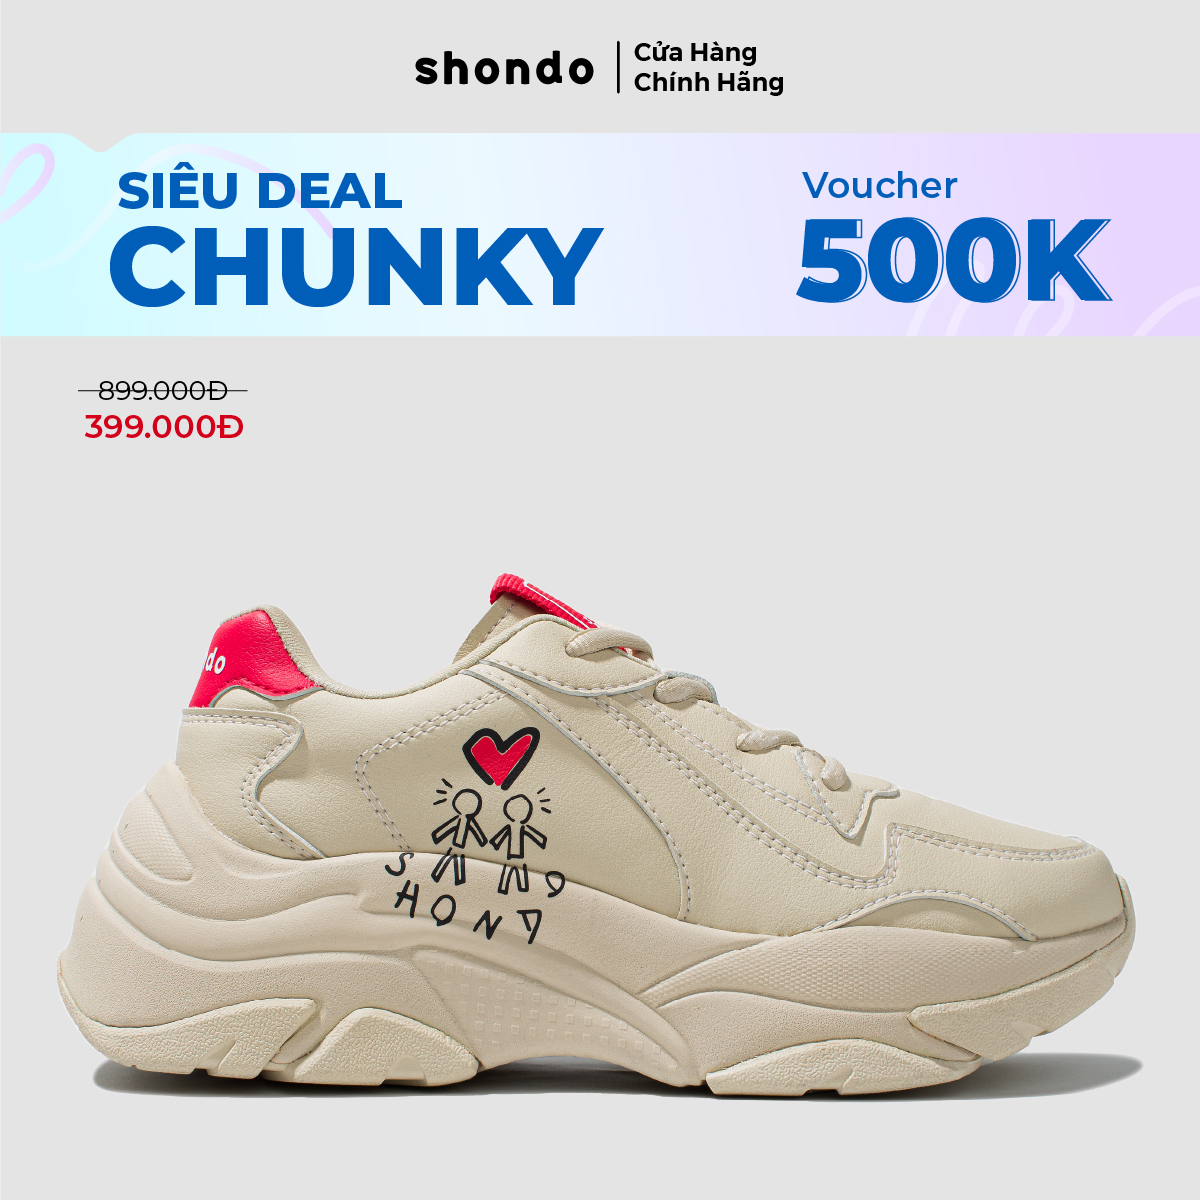 [Voucher 500k] [Nên tăng 1 size] Giày Shondo Chunky S1 Match Be CHN2626